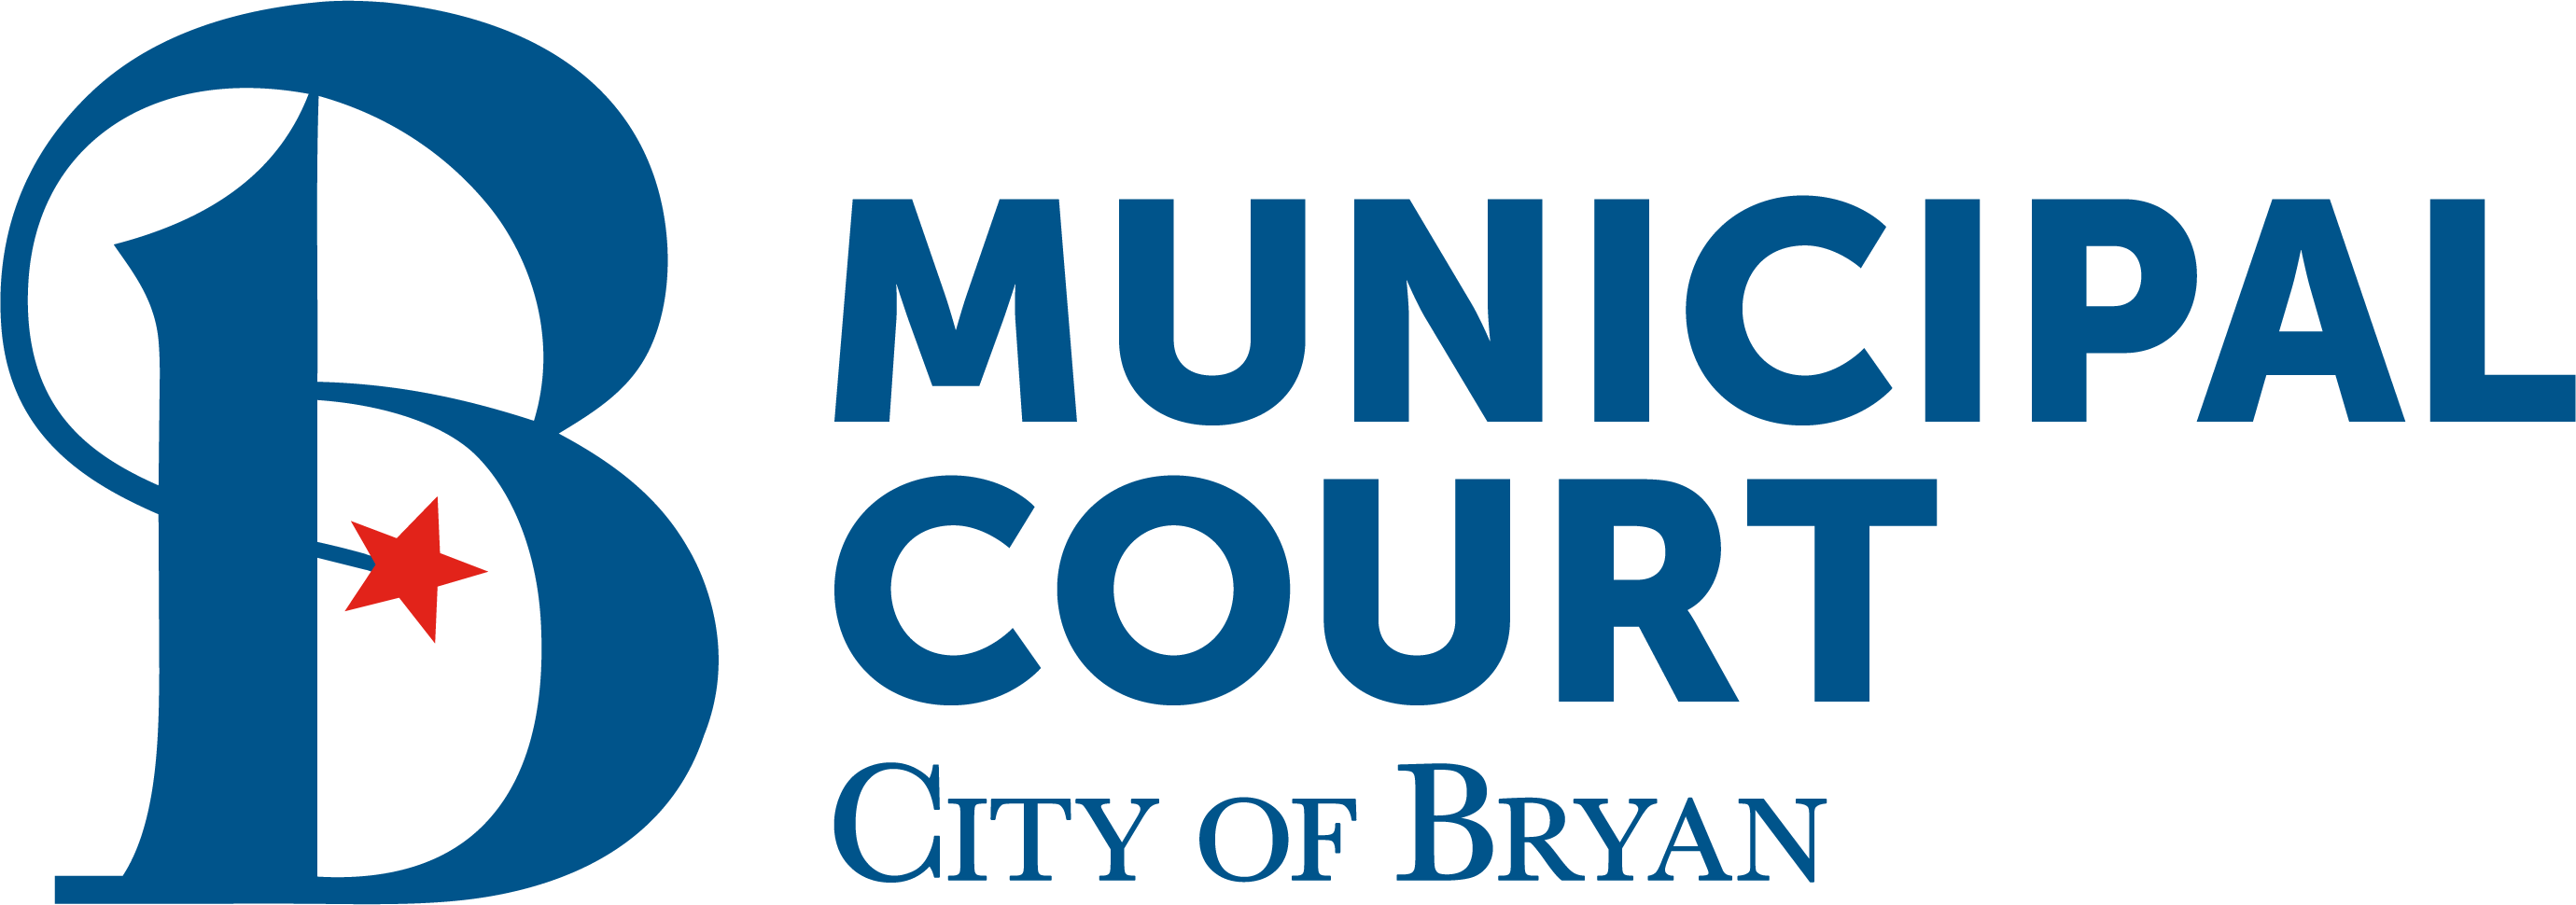 Bryan Municipal Court Logo